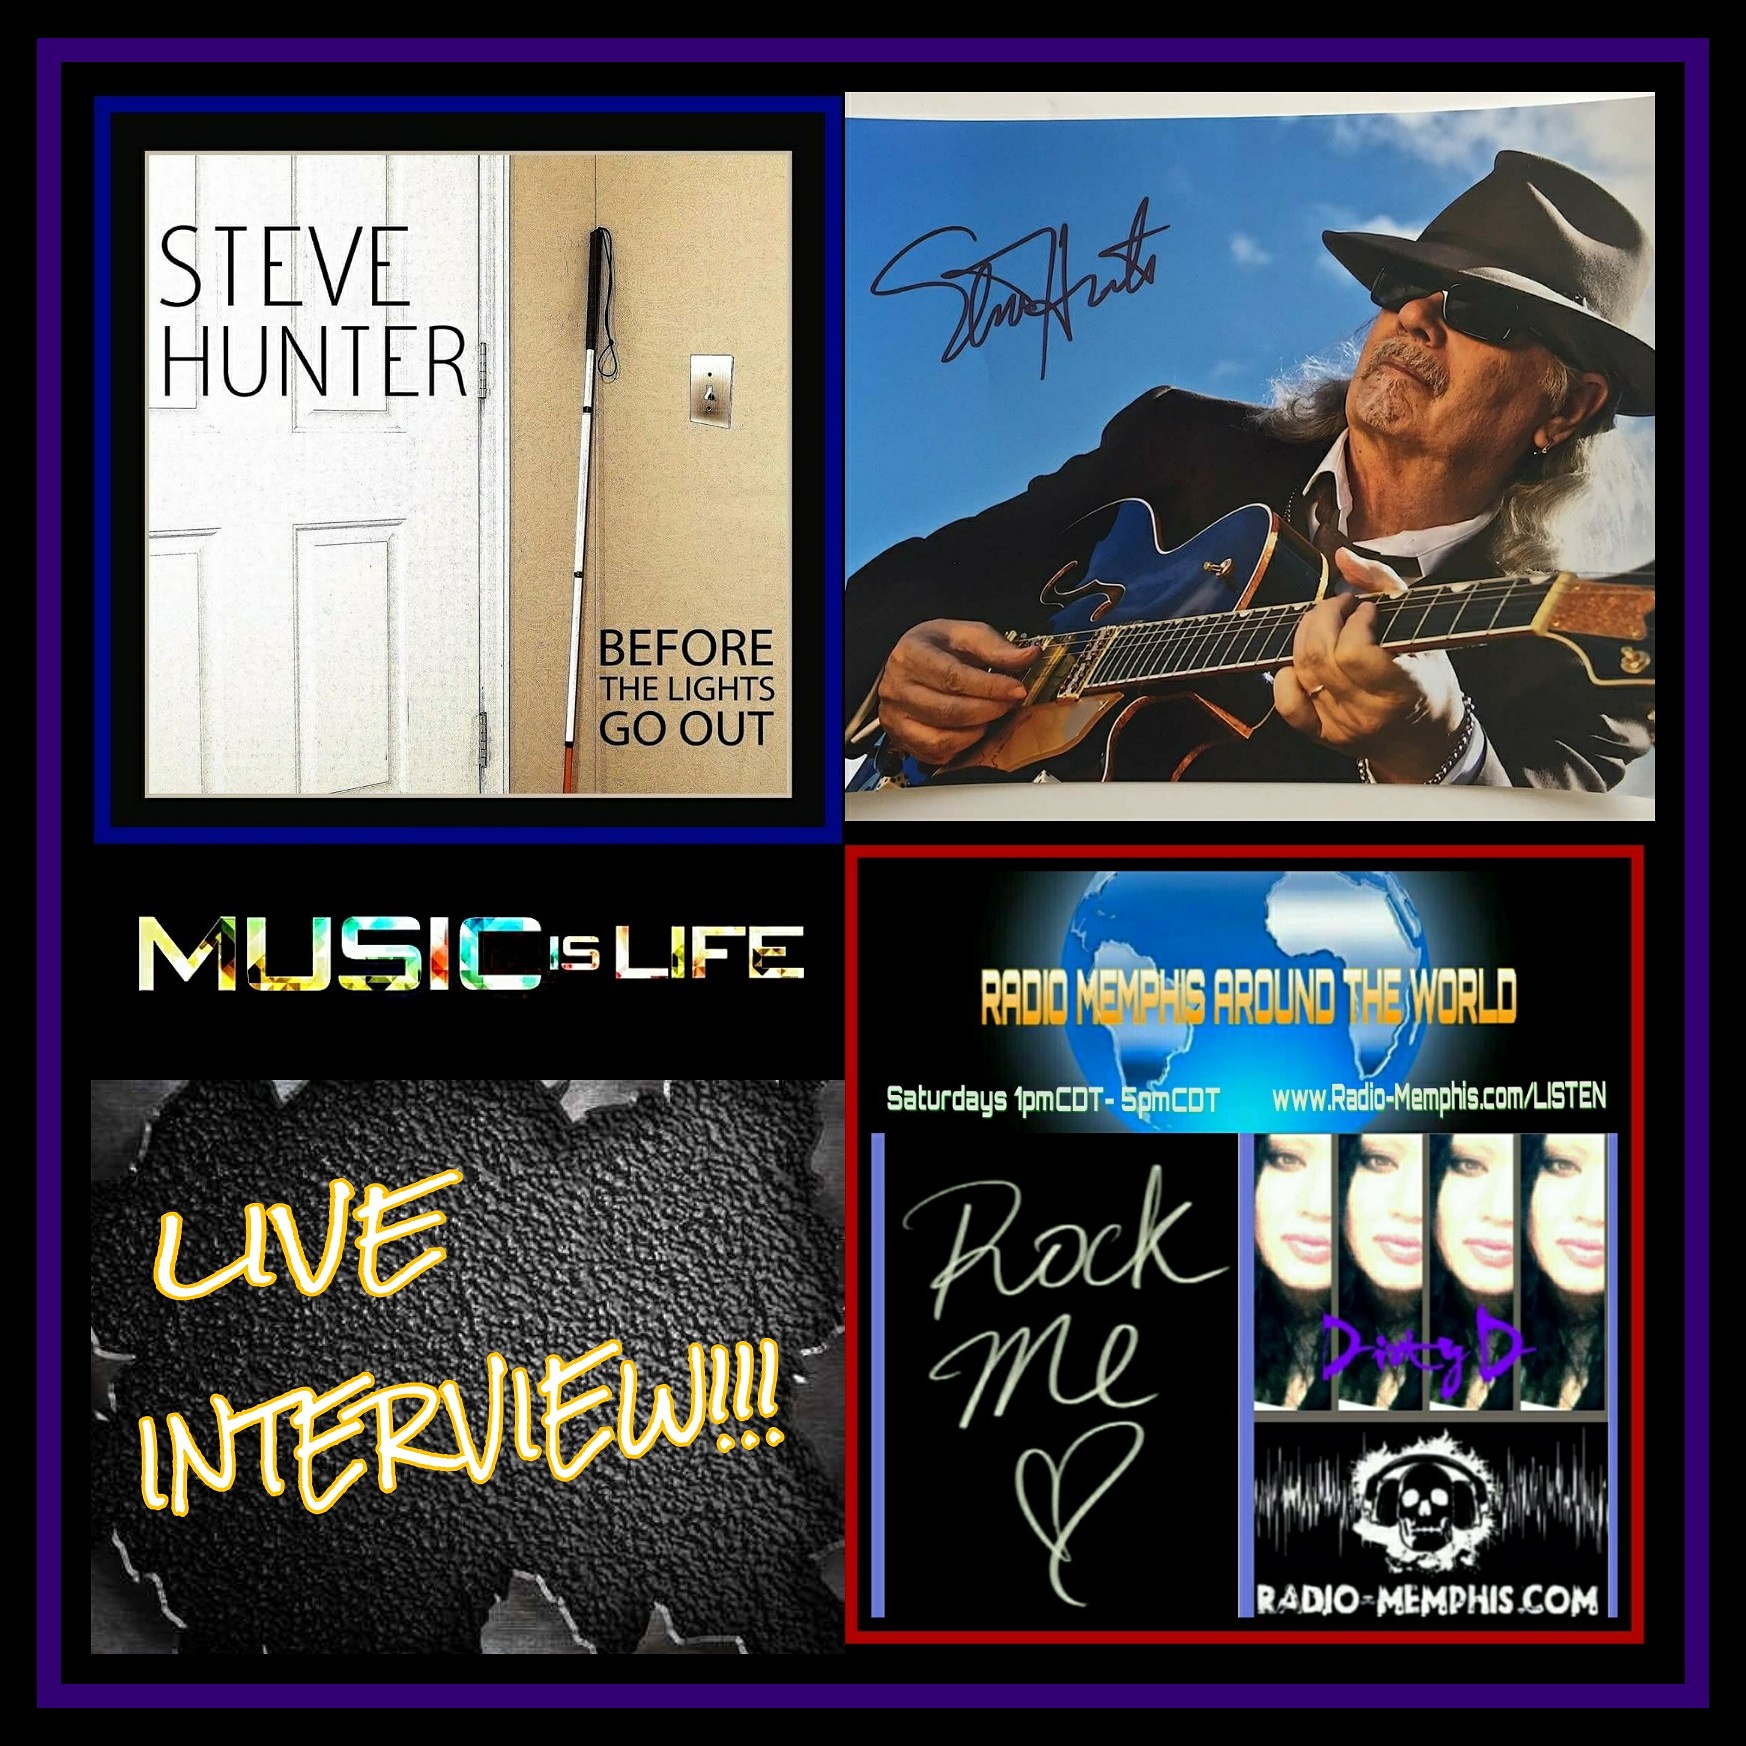 Steve Hunter - Radio Memphis Around the World - RMOD